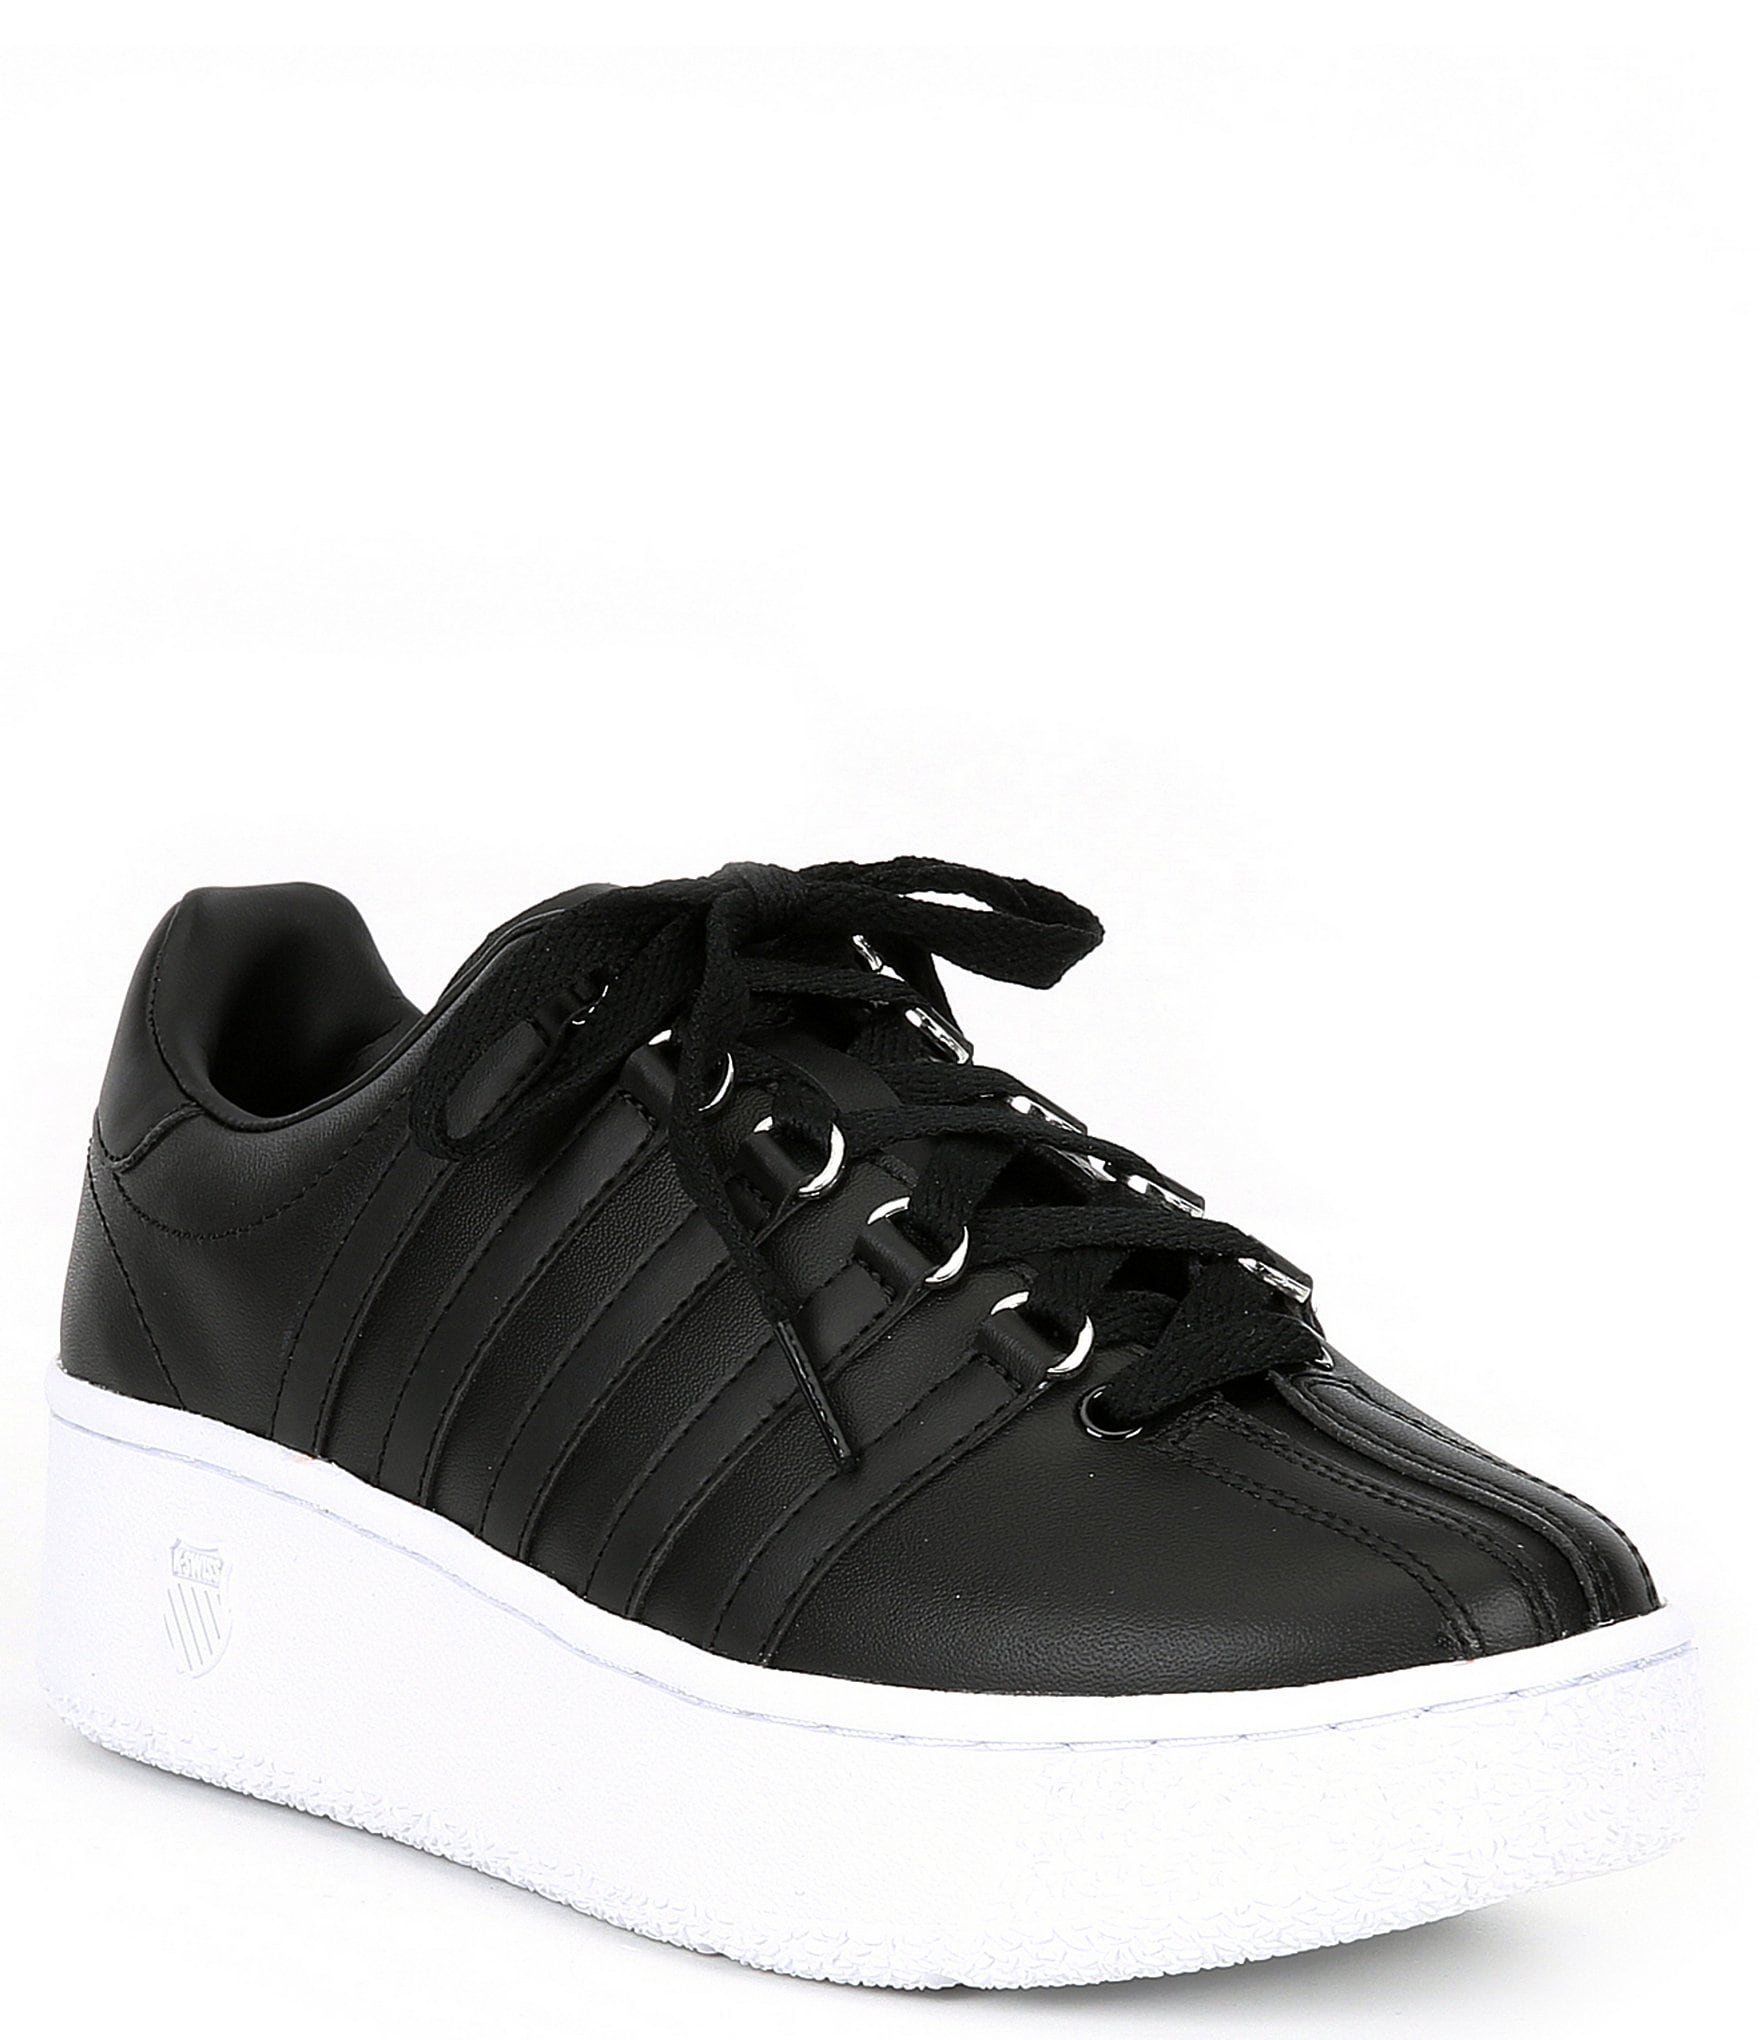 Black & White sneakers